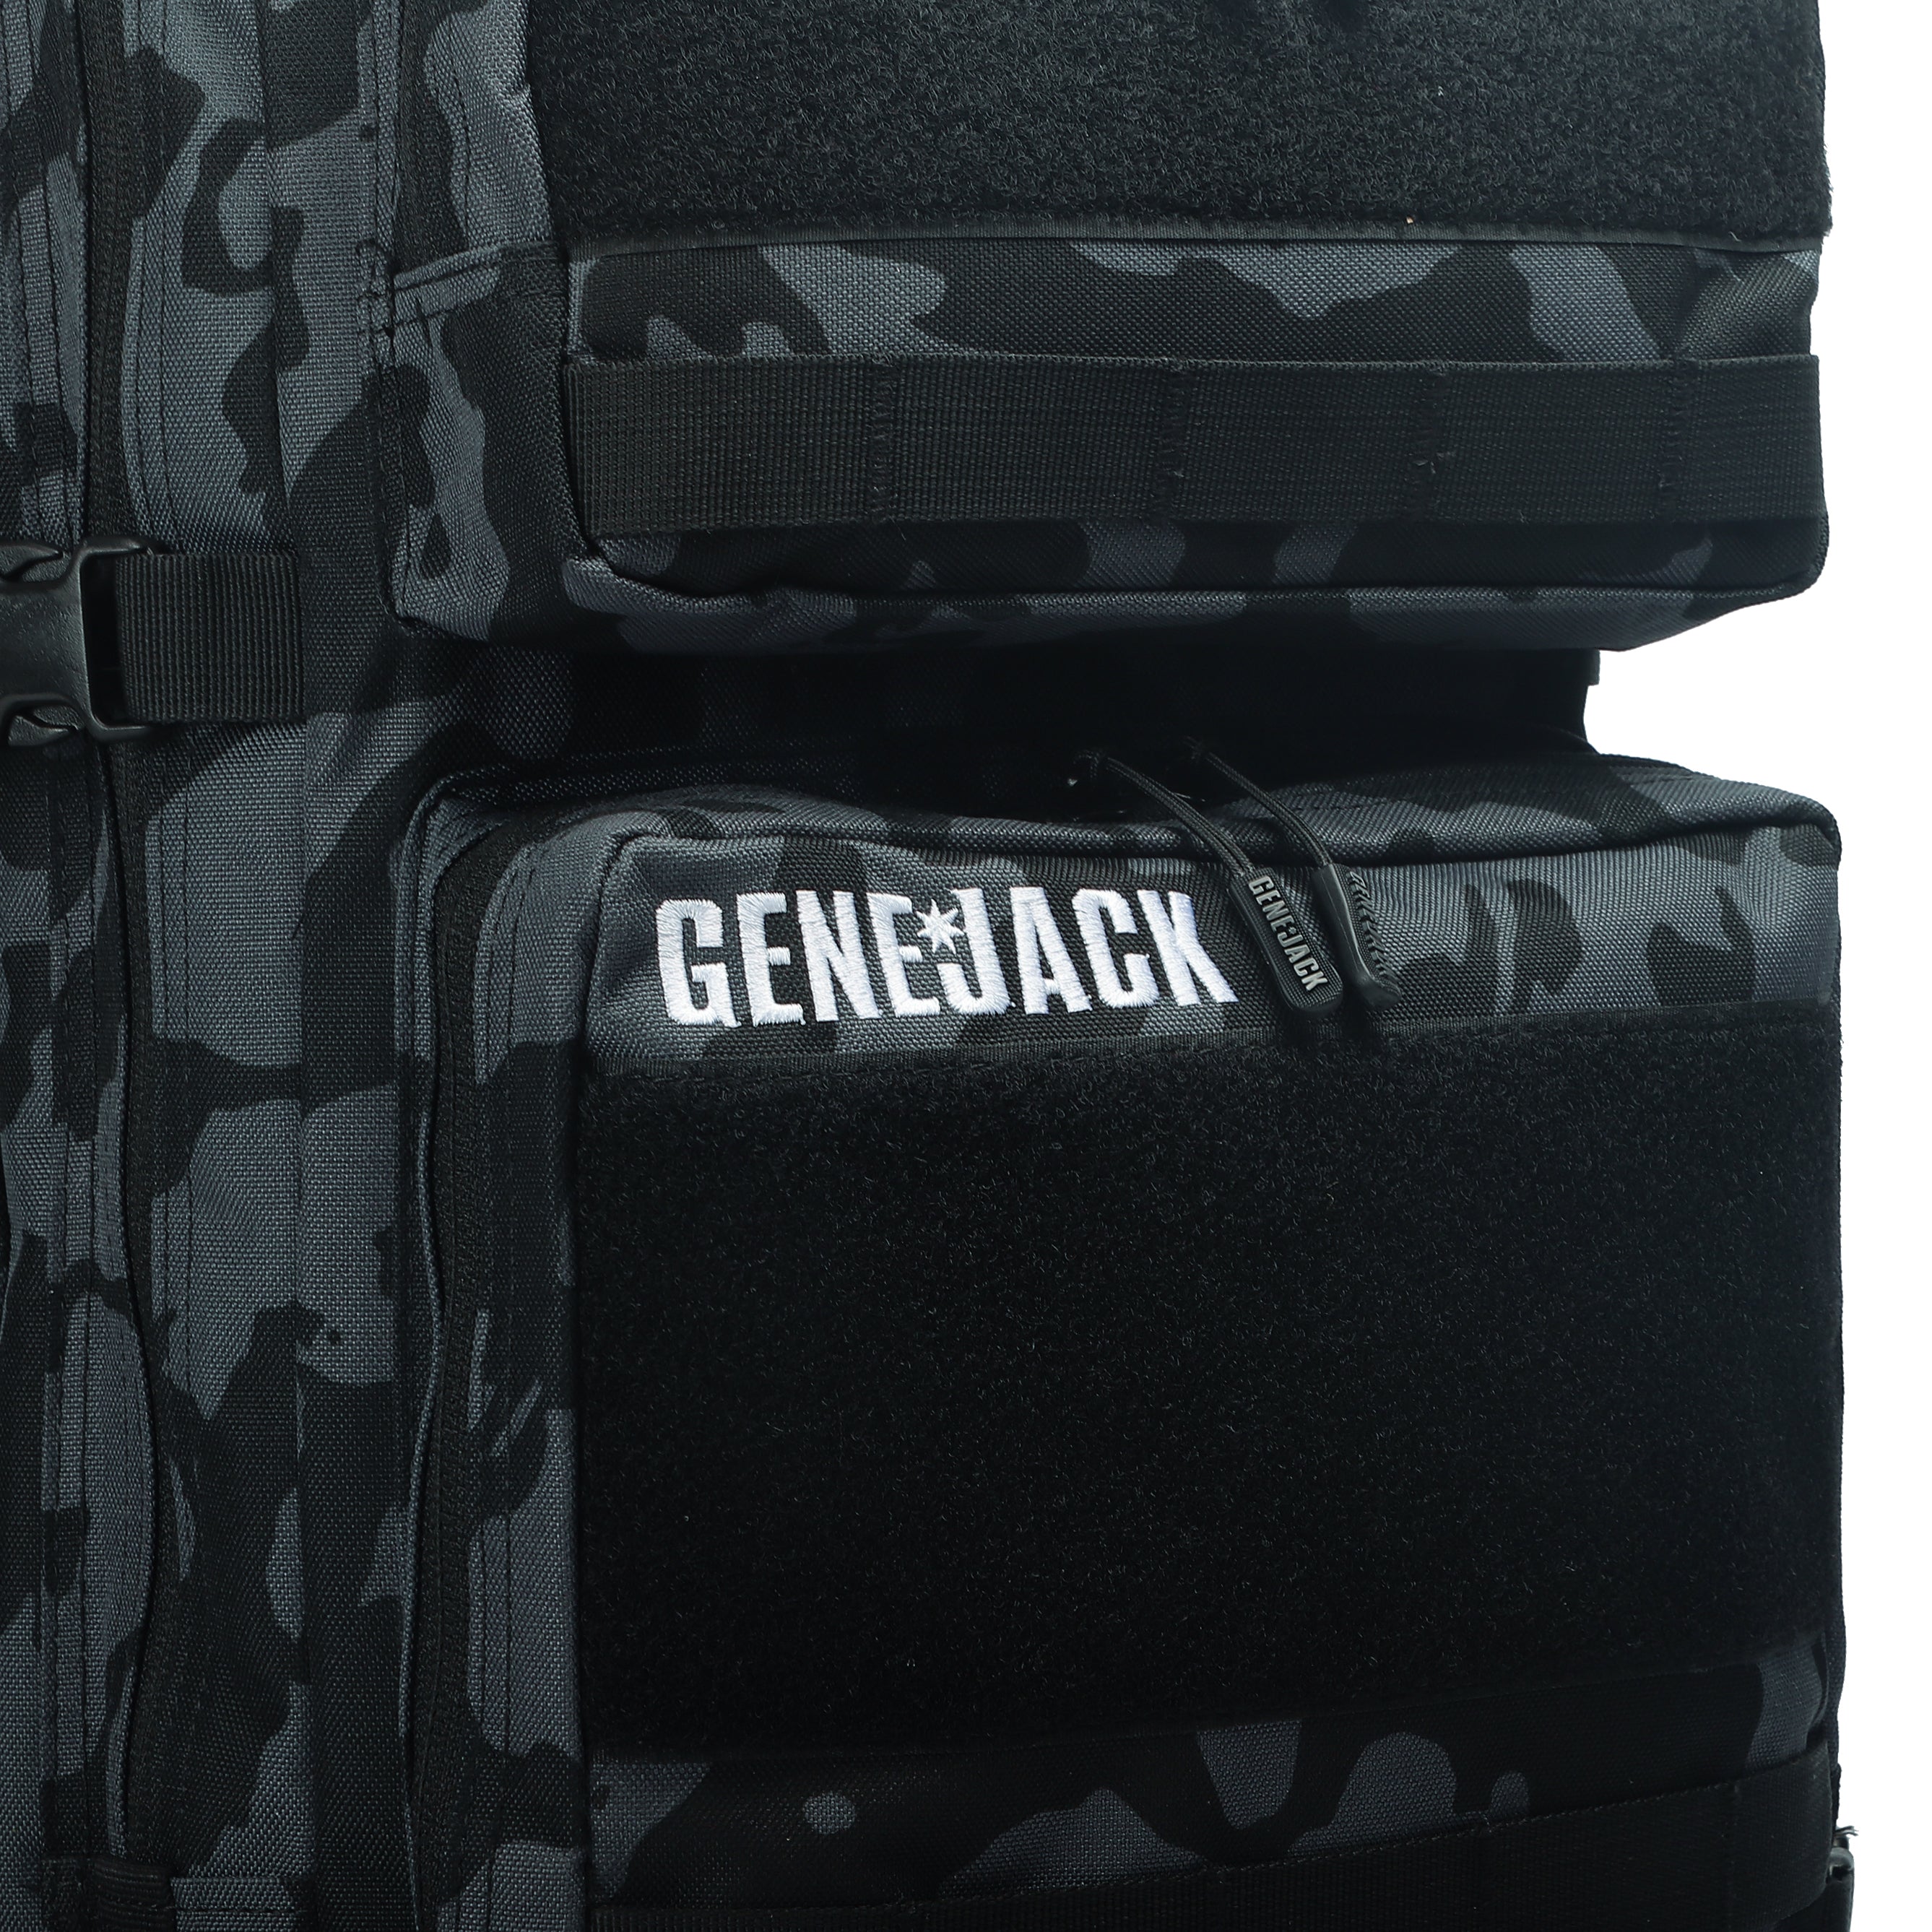 3.0 Titan Bag - 45L Grey Camo from Genejack for Genejack WOD